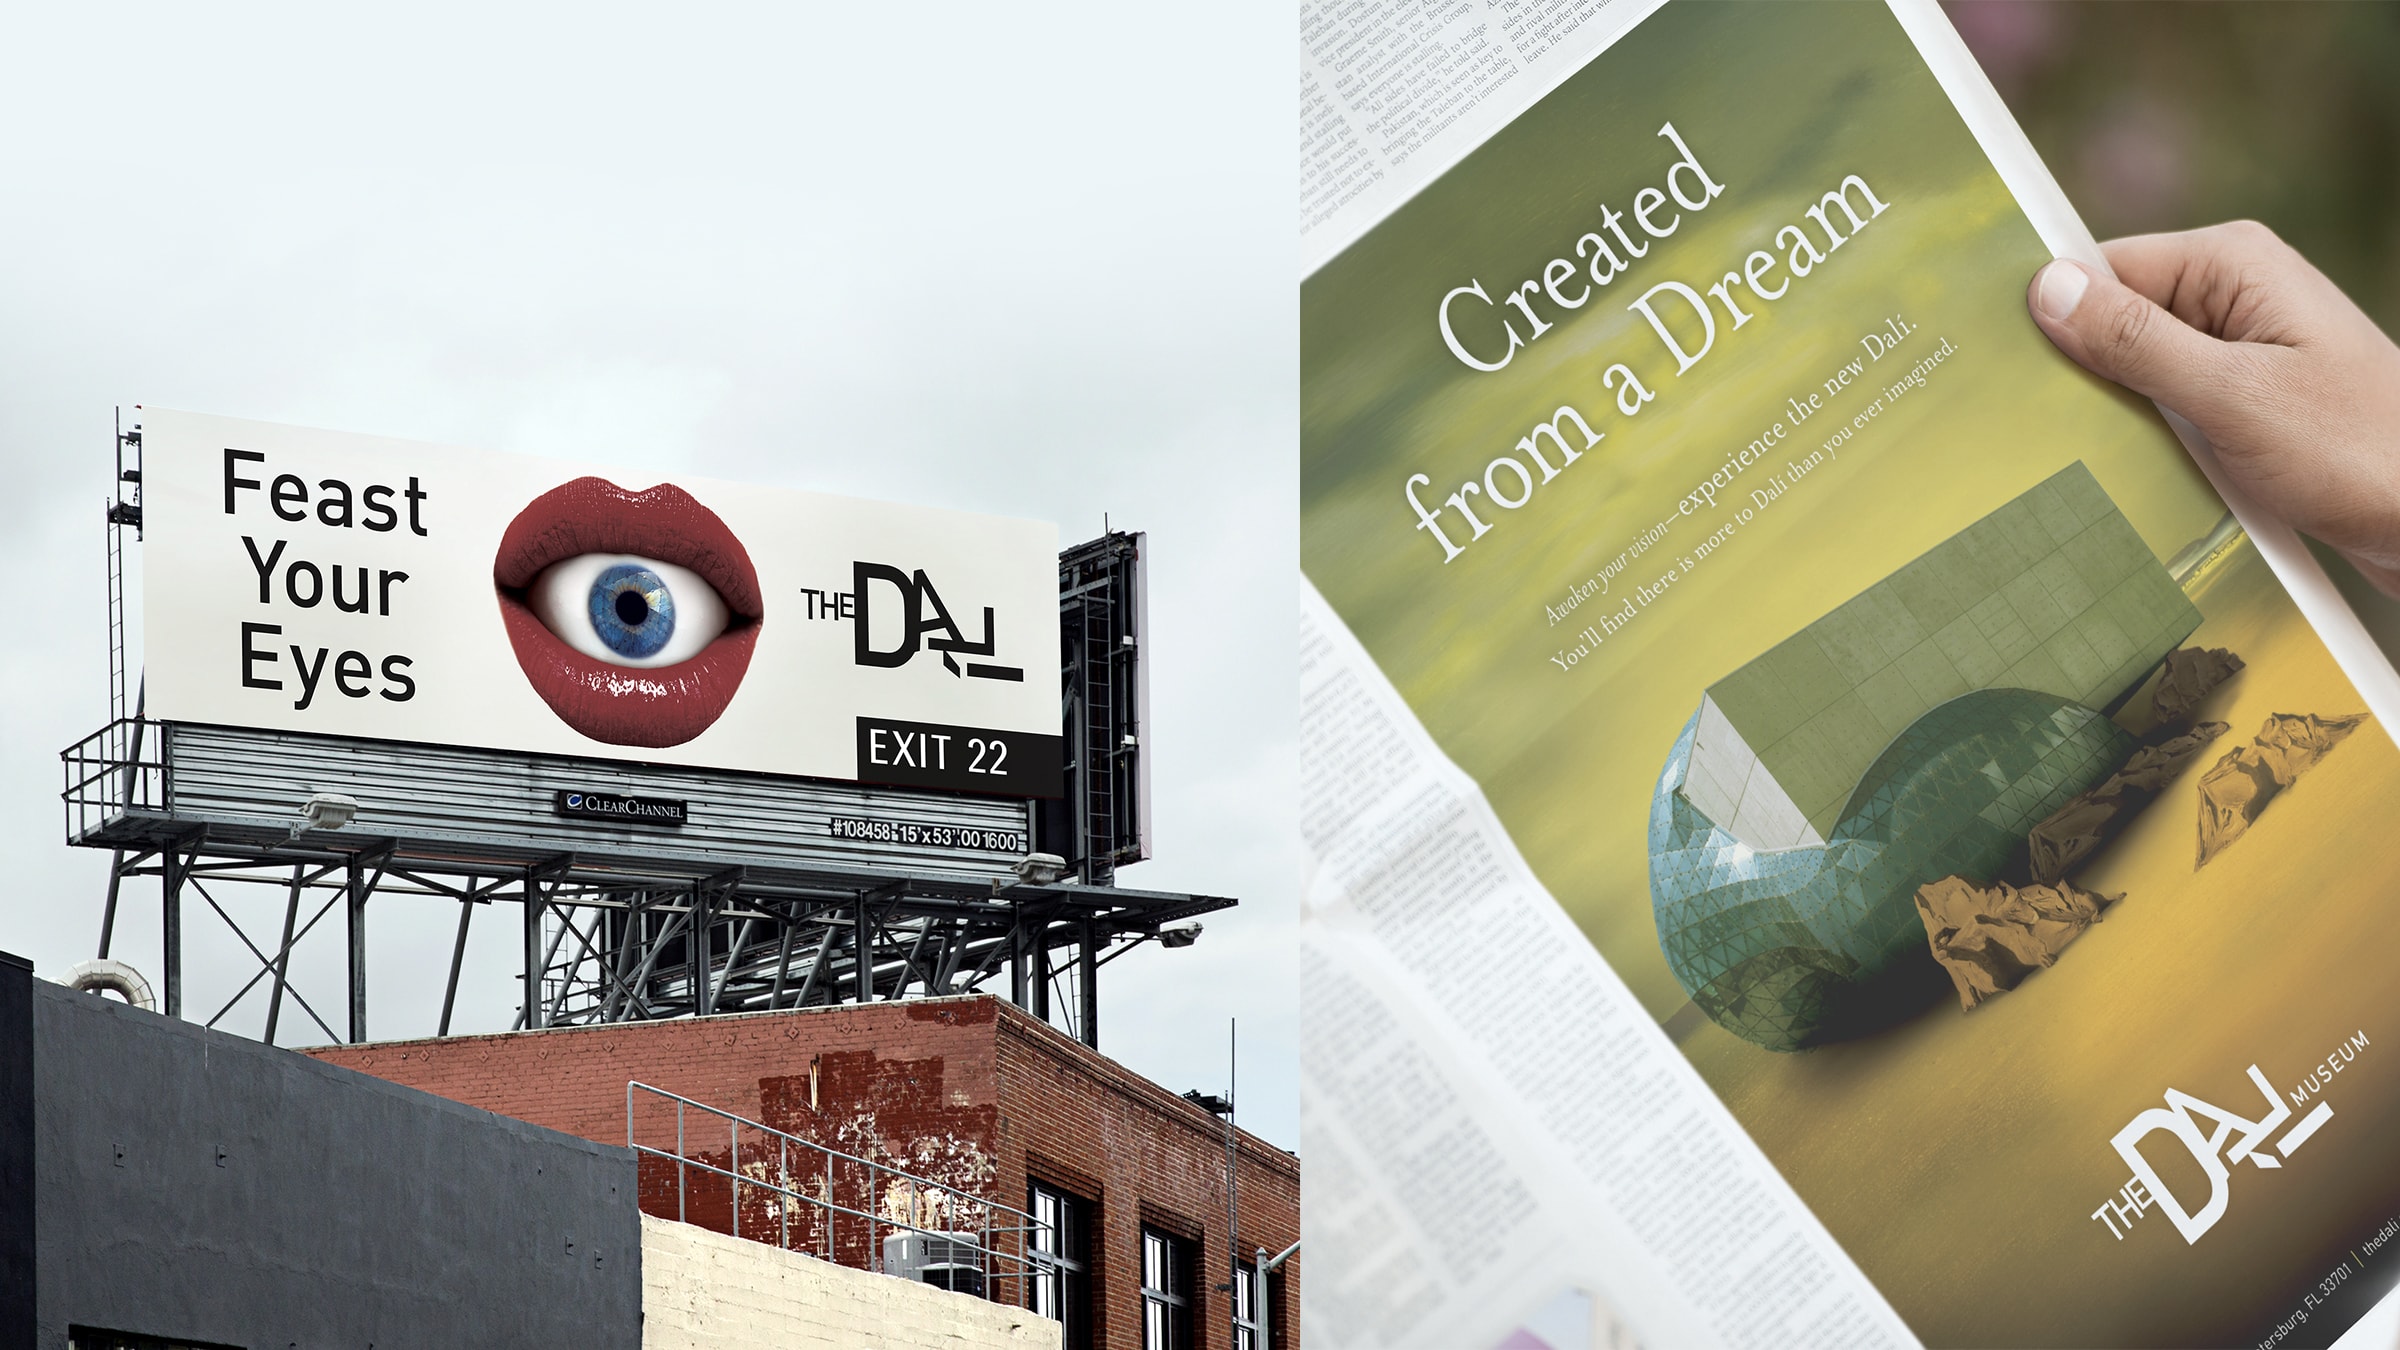 Dali museum grand opening billboard and print ad